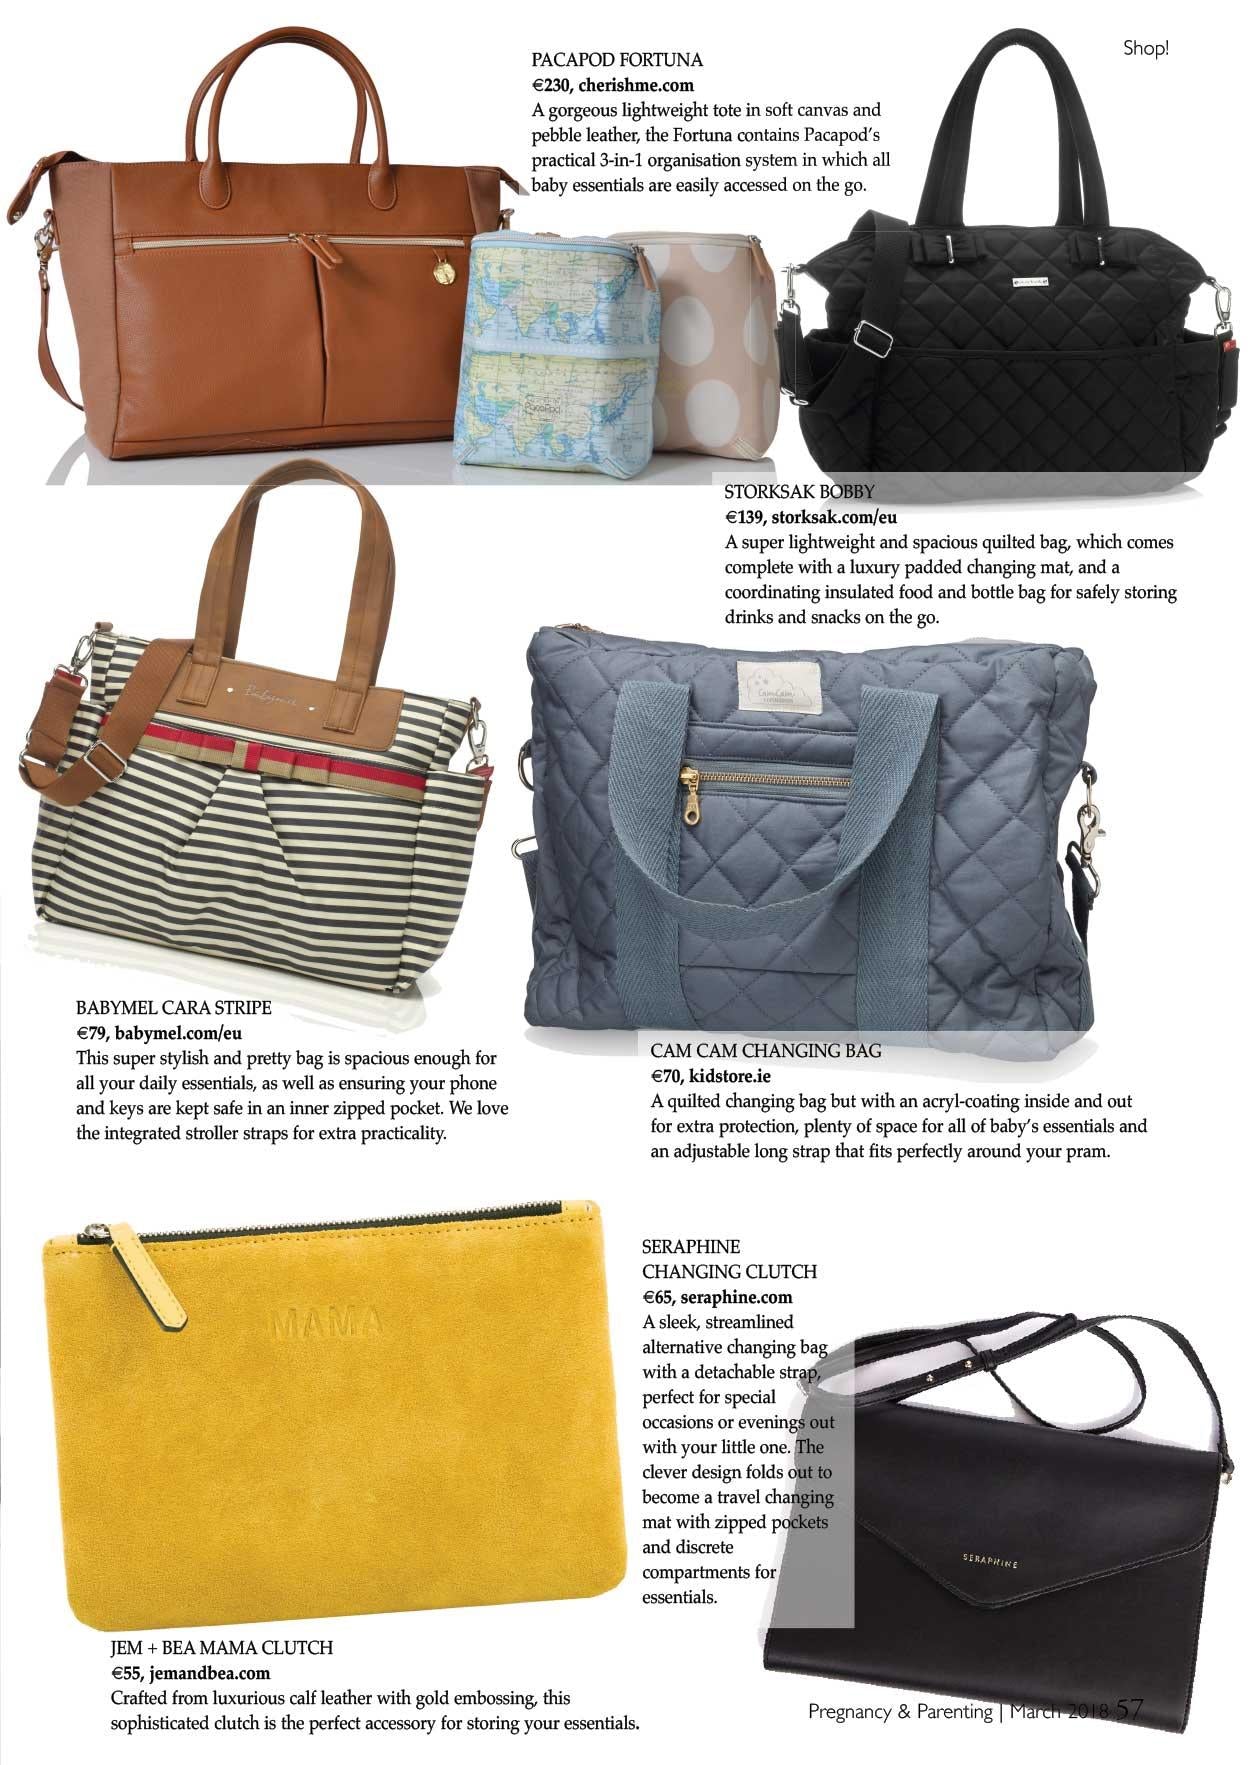 Fortuna Bag features in Pregnancy & Parenting Magazine